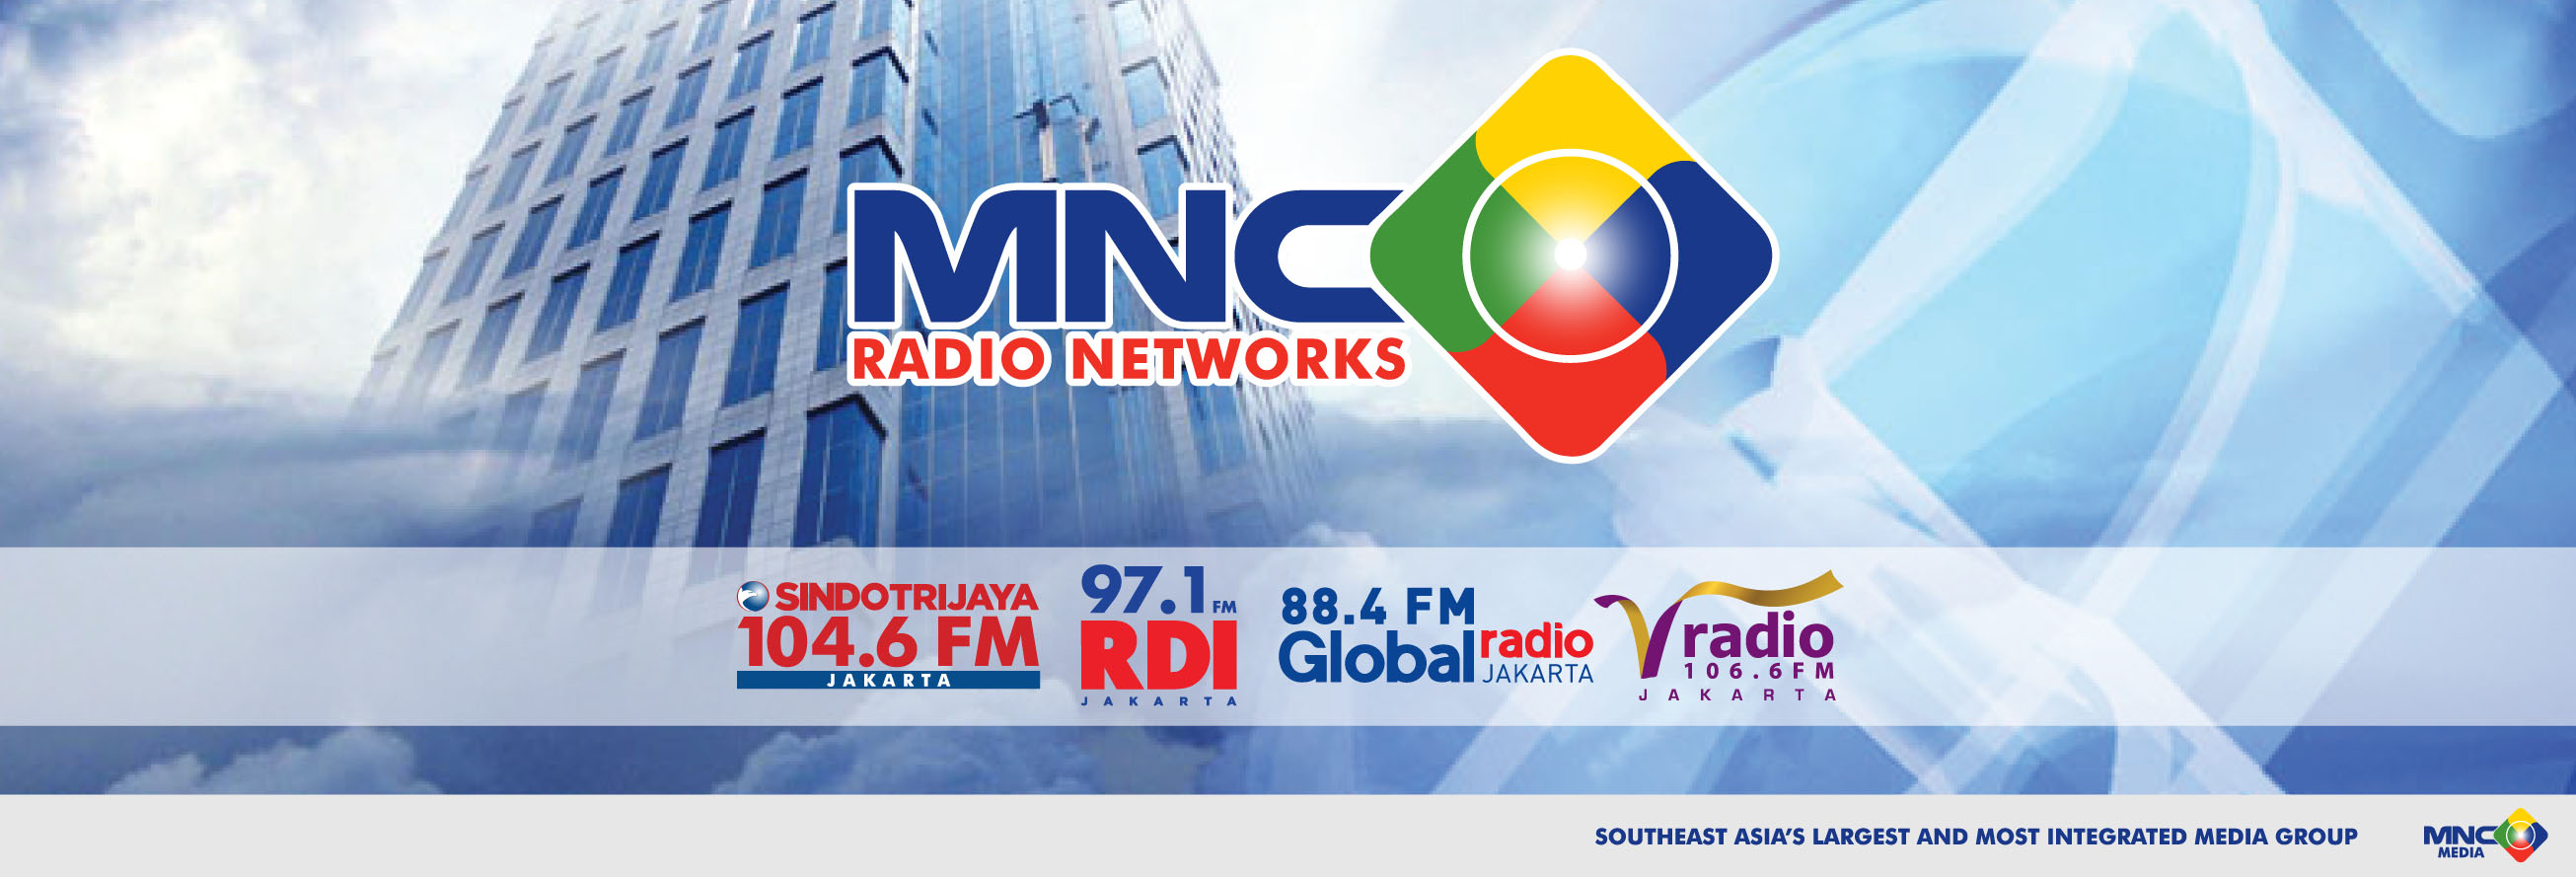 MNC Radio Networks